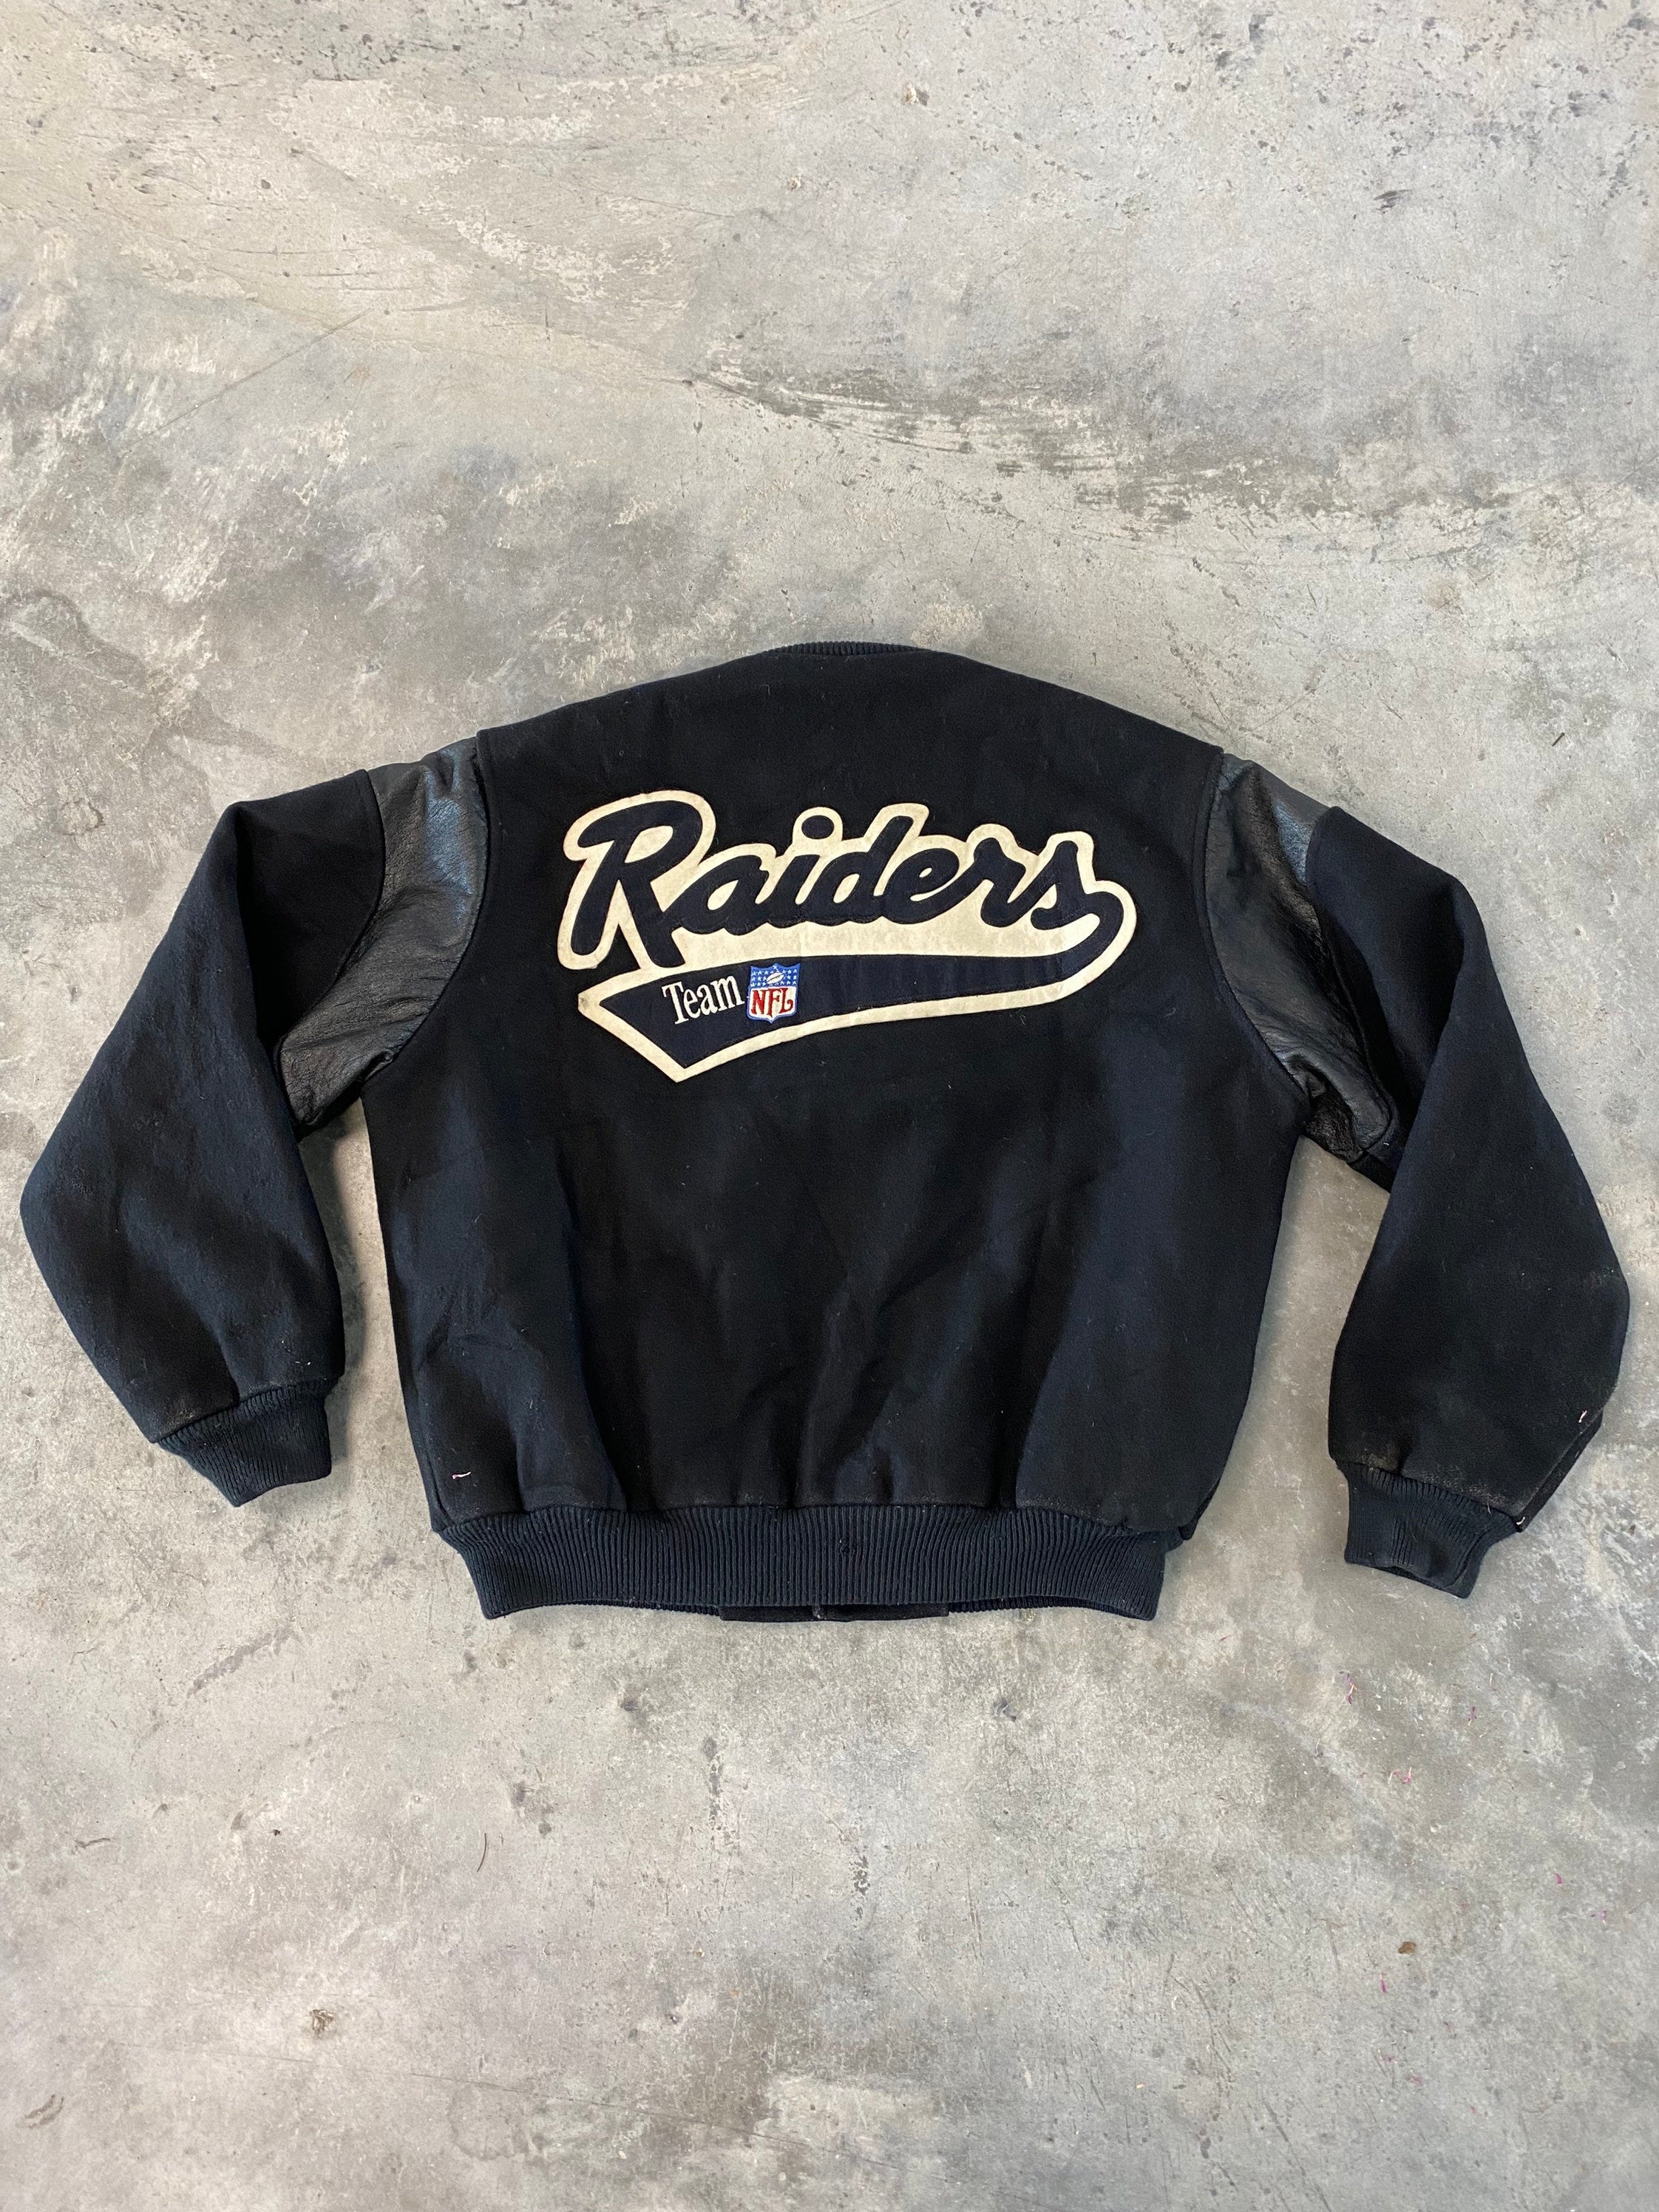 Get Oakland Raider Letterman Jacket